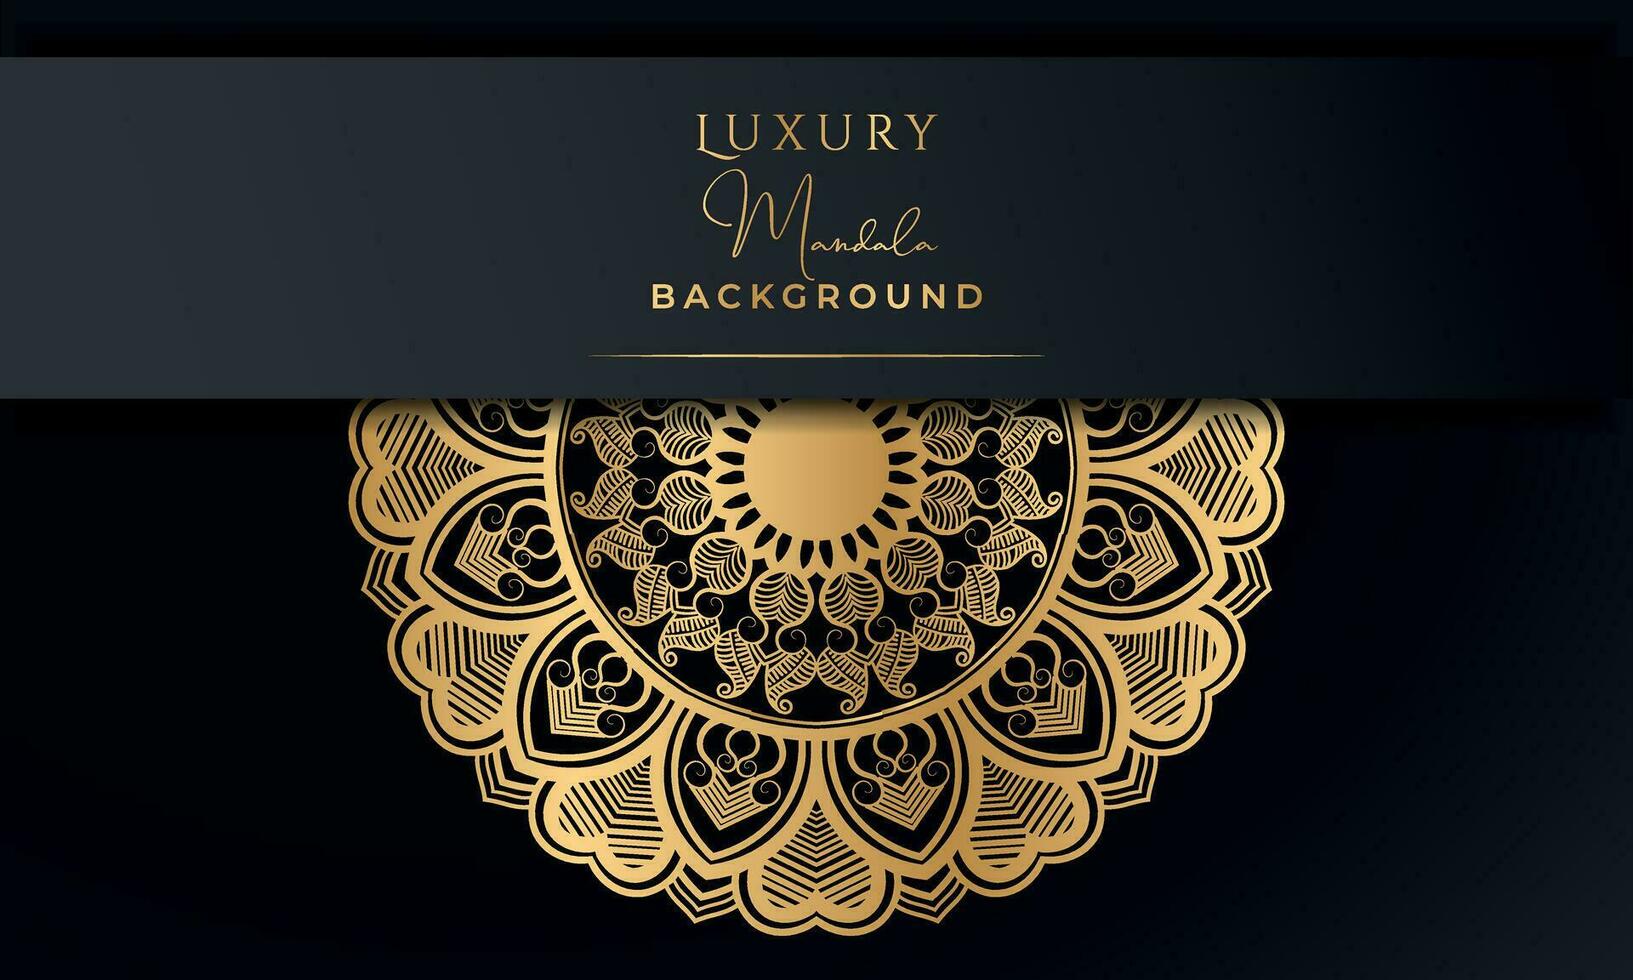 Luxury mandala background with golden pattern style ornament elegant invitation wedding card, invitation, backdrop, luxury style vector illustration design.